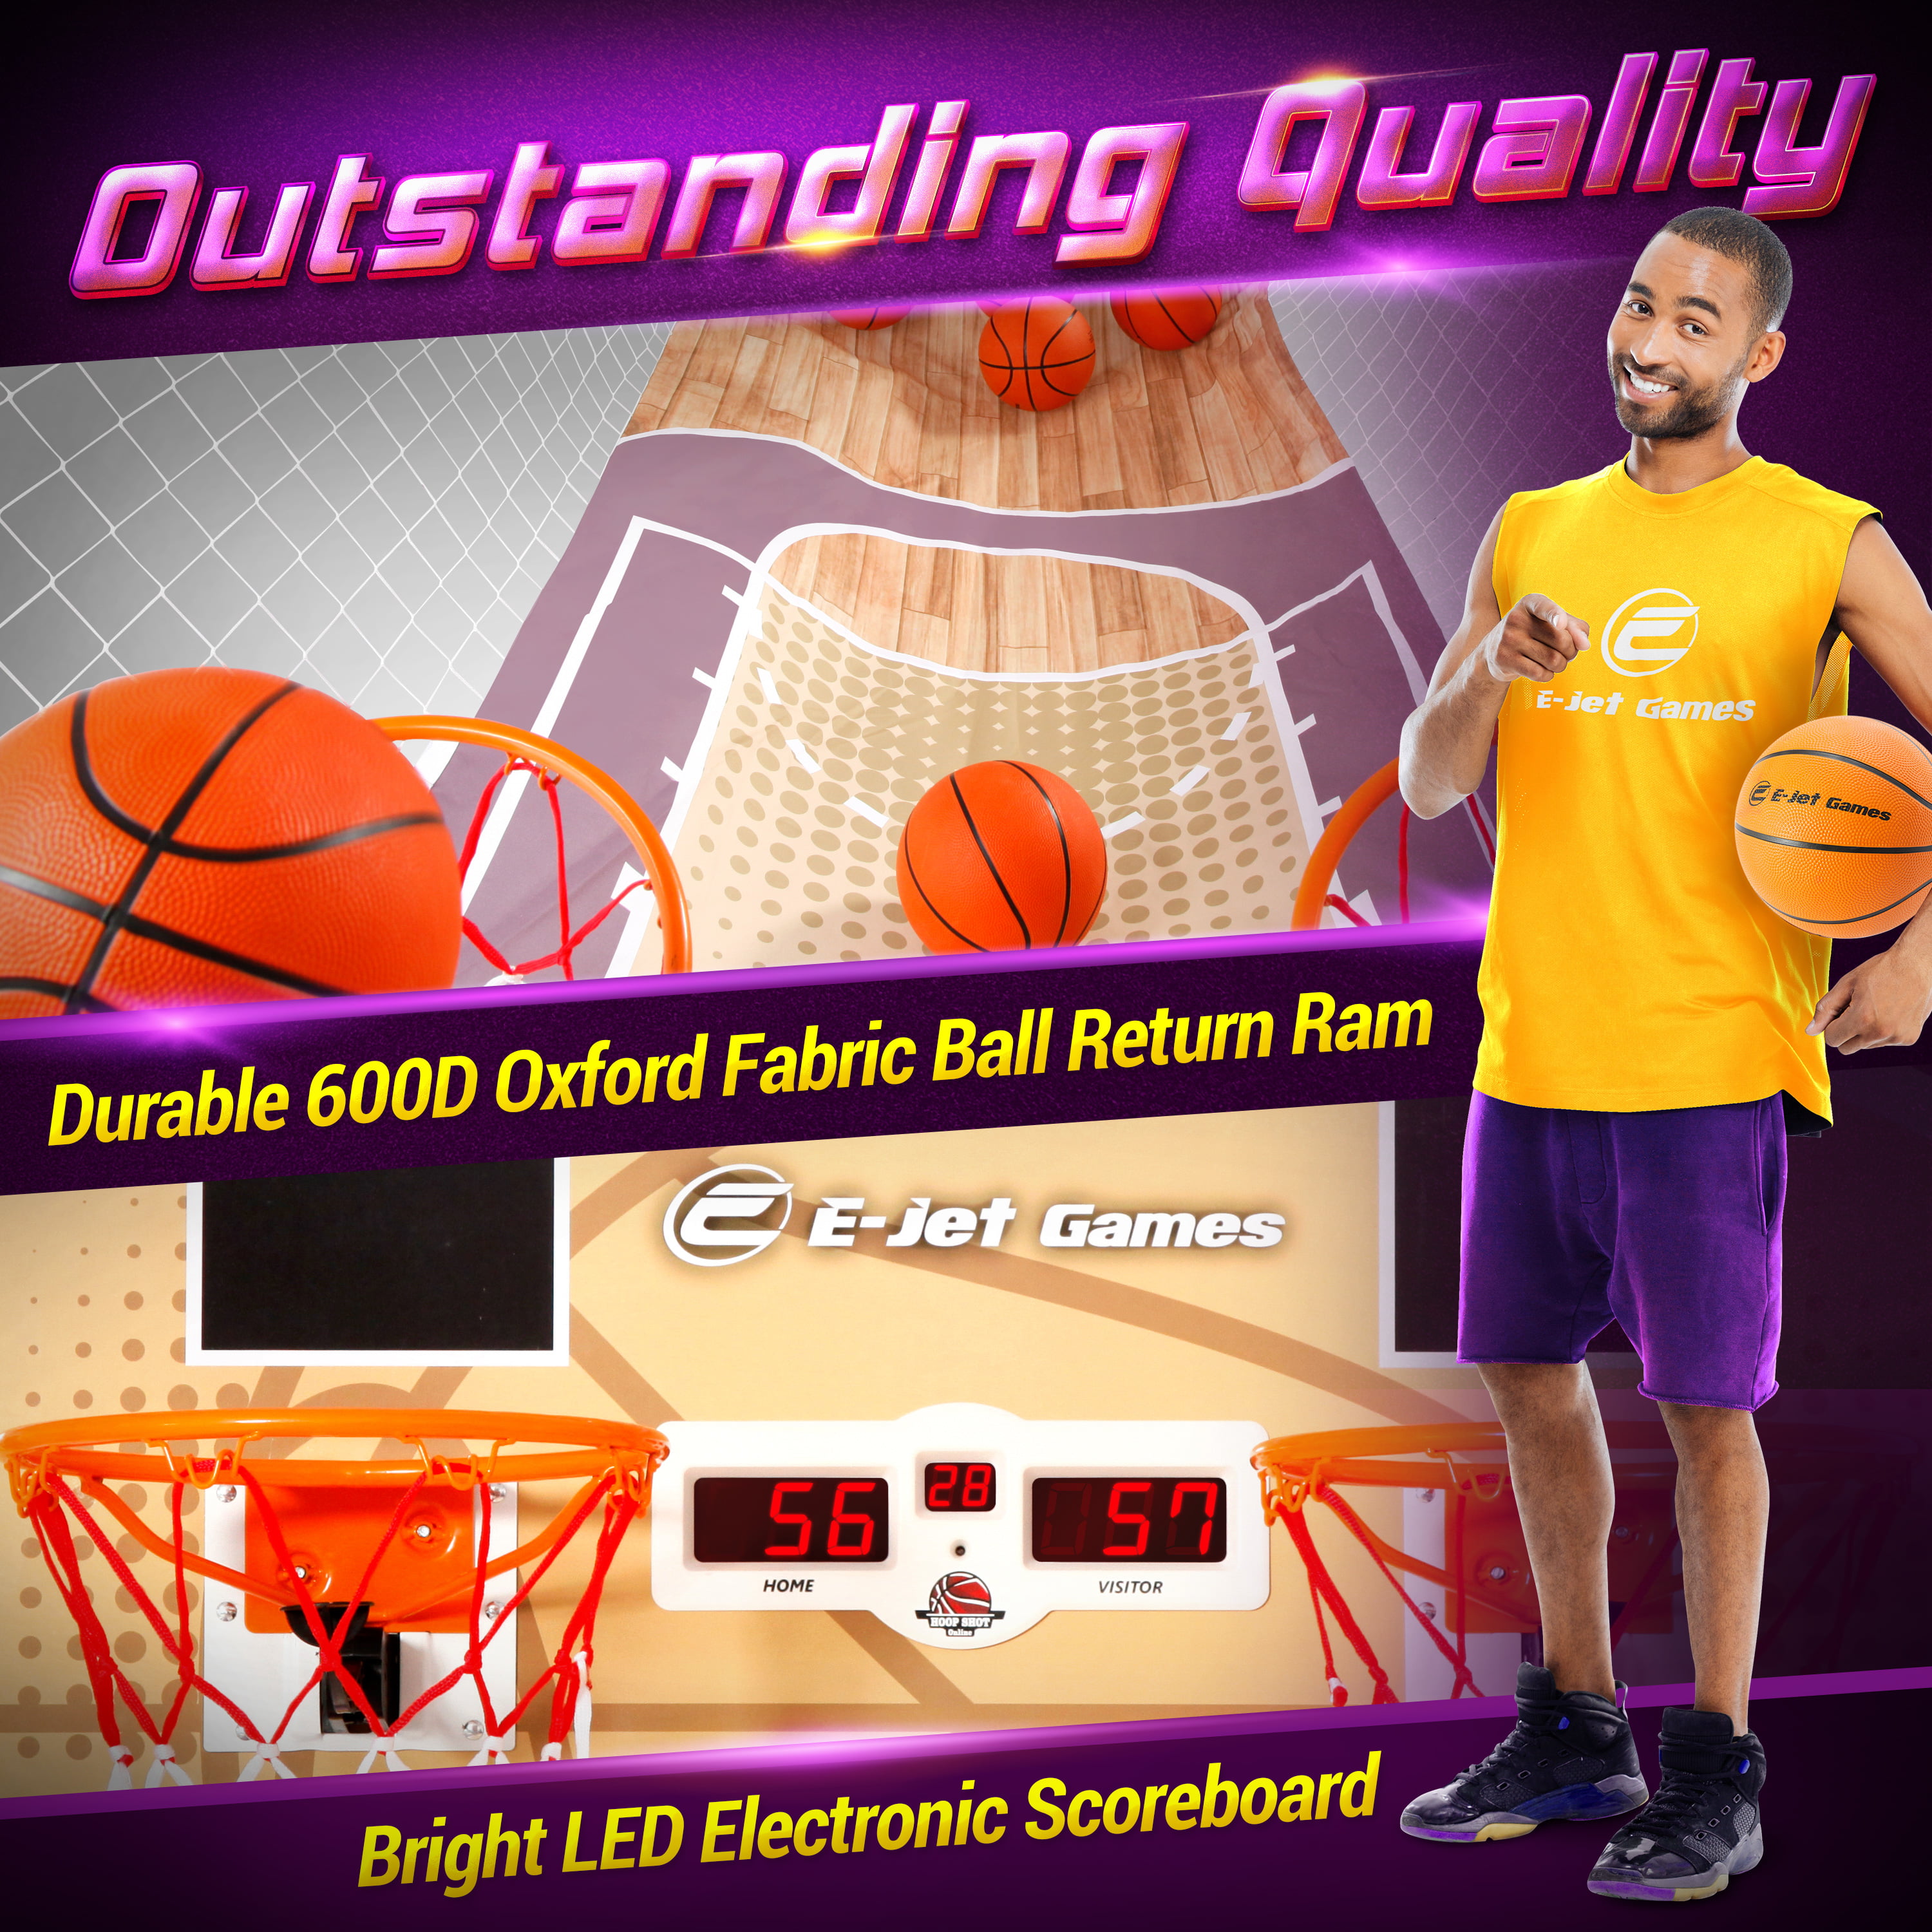 E-Jet Sport Game Basketball Arcade Games (Online Battle and Challenge, Shoot Hoops) - Electronic Arcade Basketball Games, Dual Shot